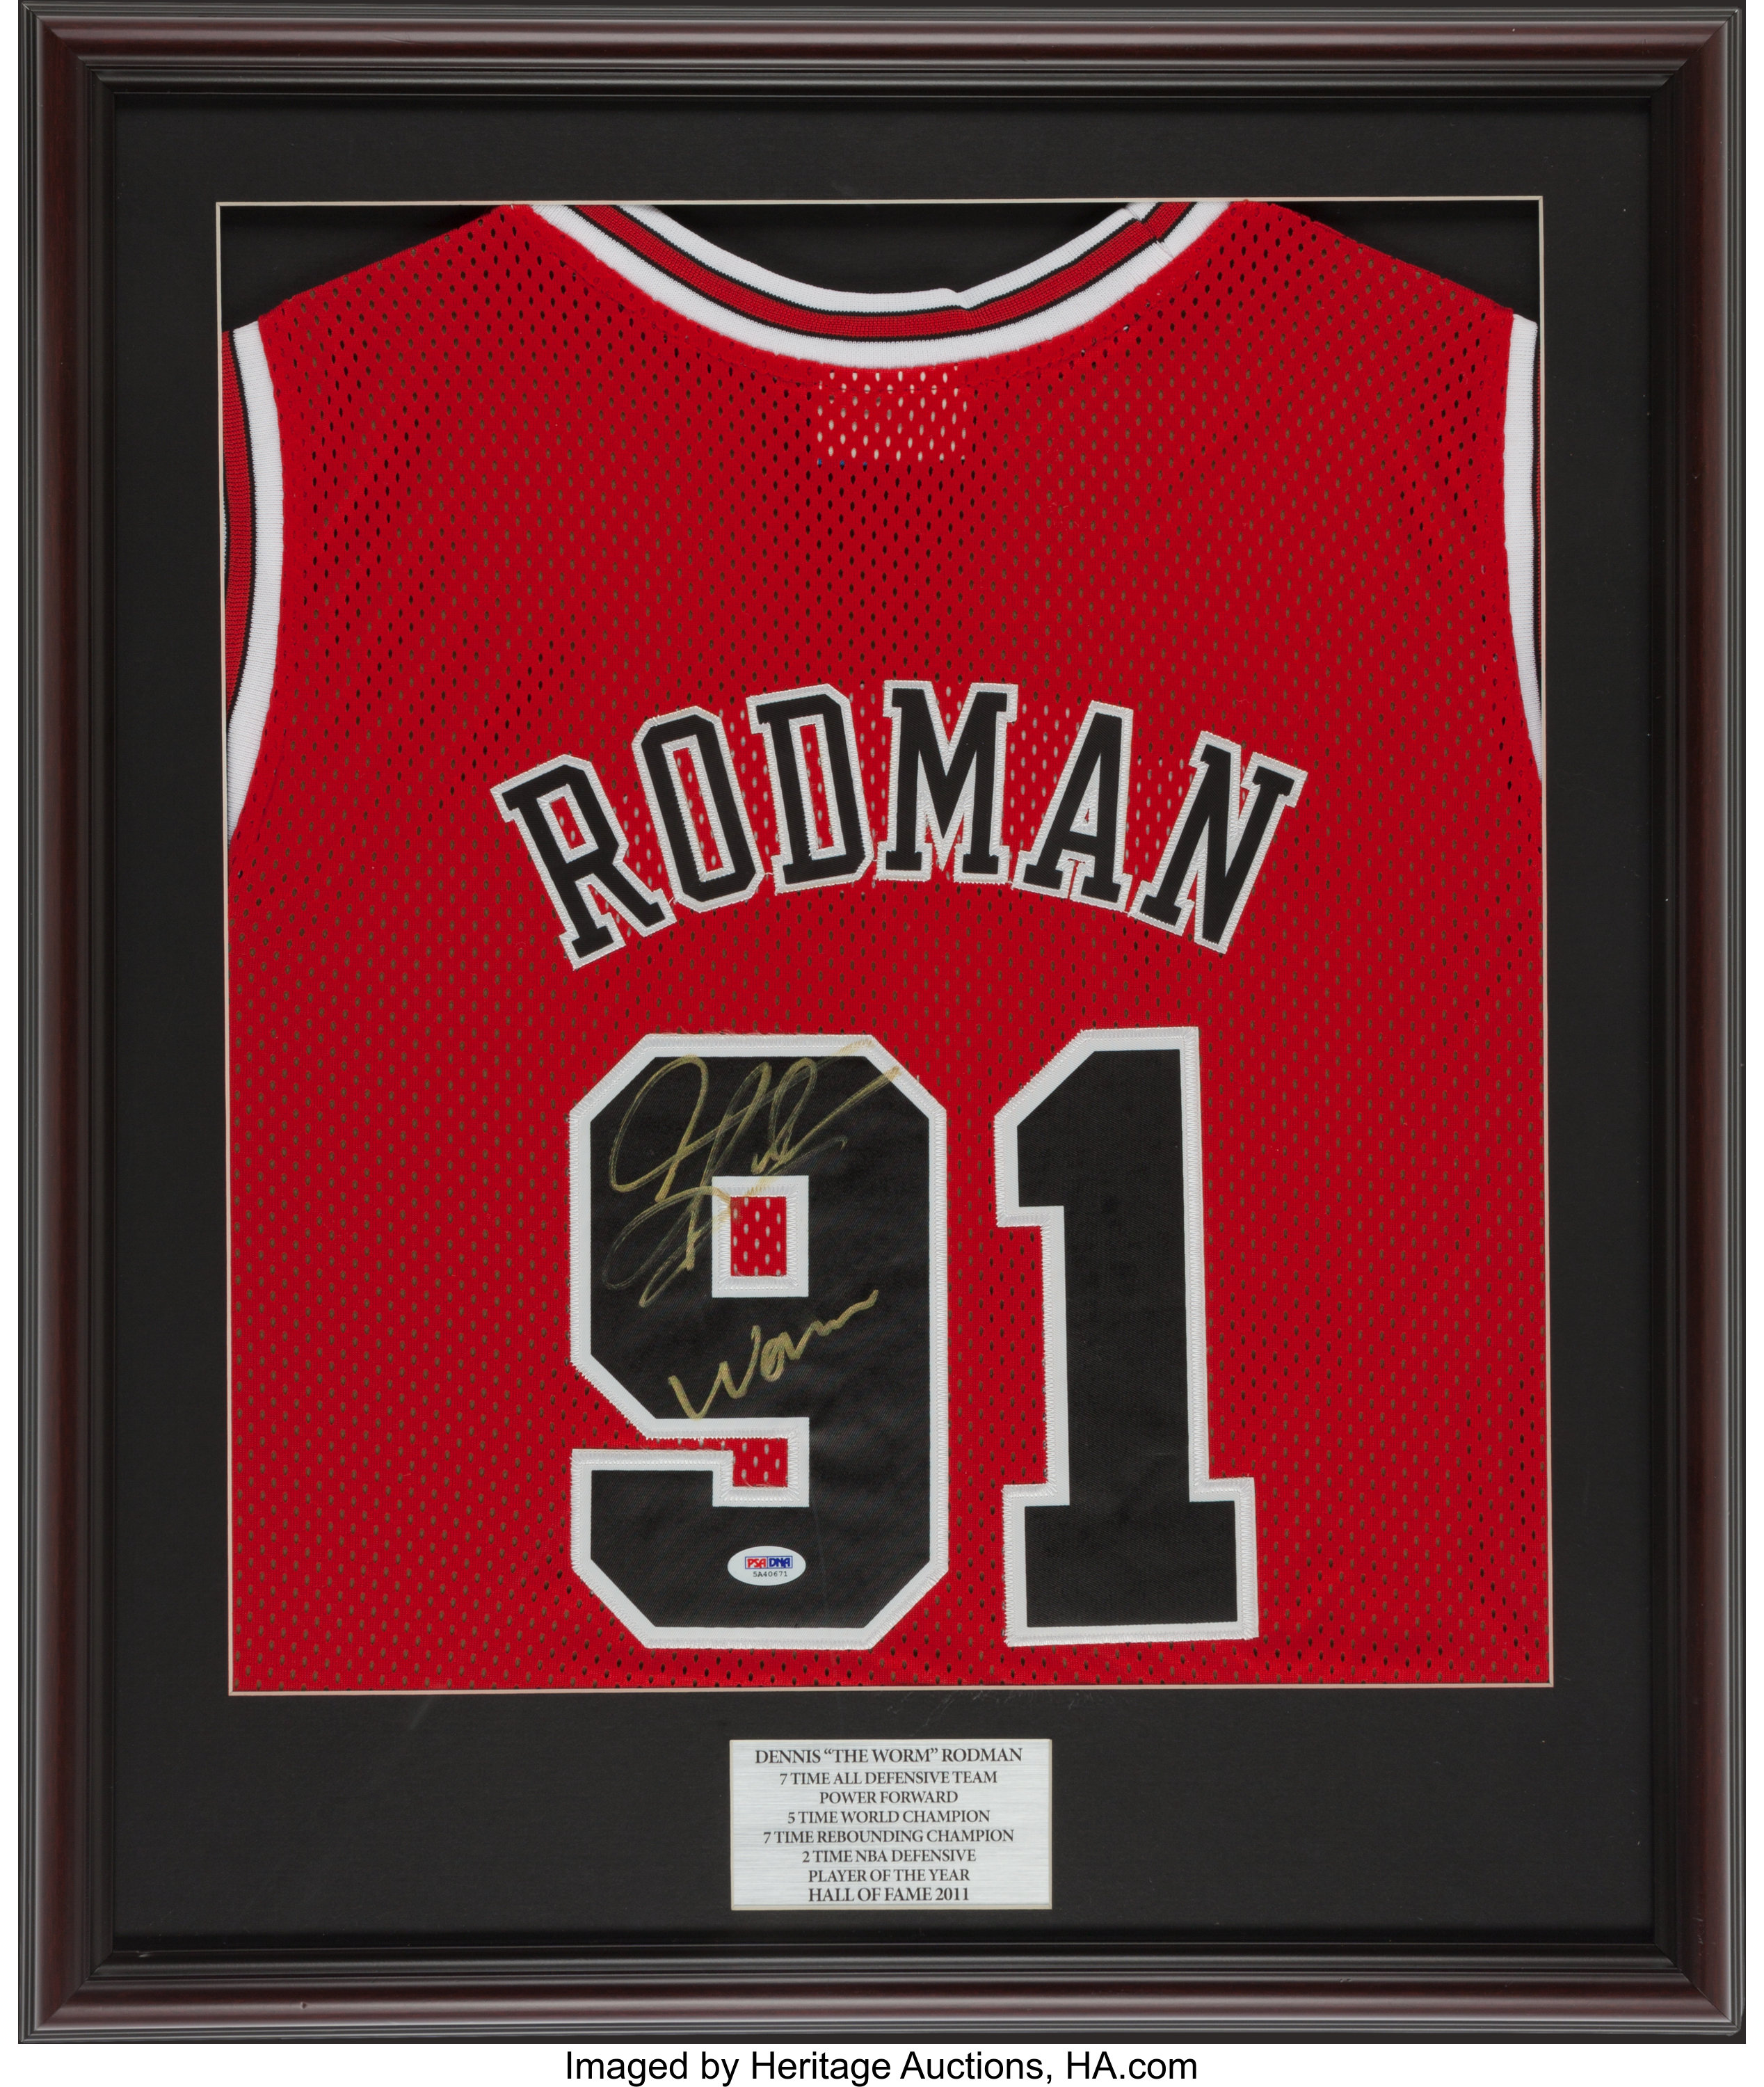 Dennis Rodman Signed Jersey. Basketball Collectibles Uniforms